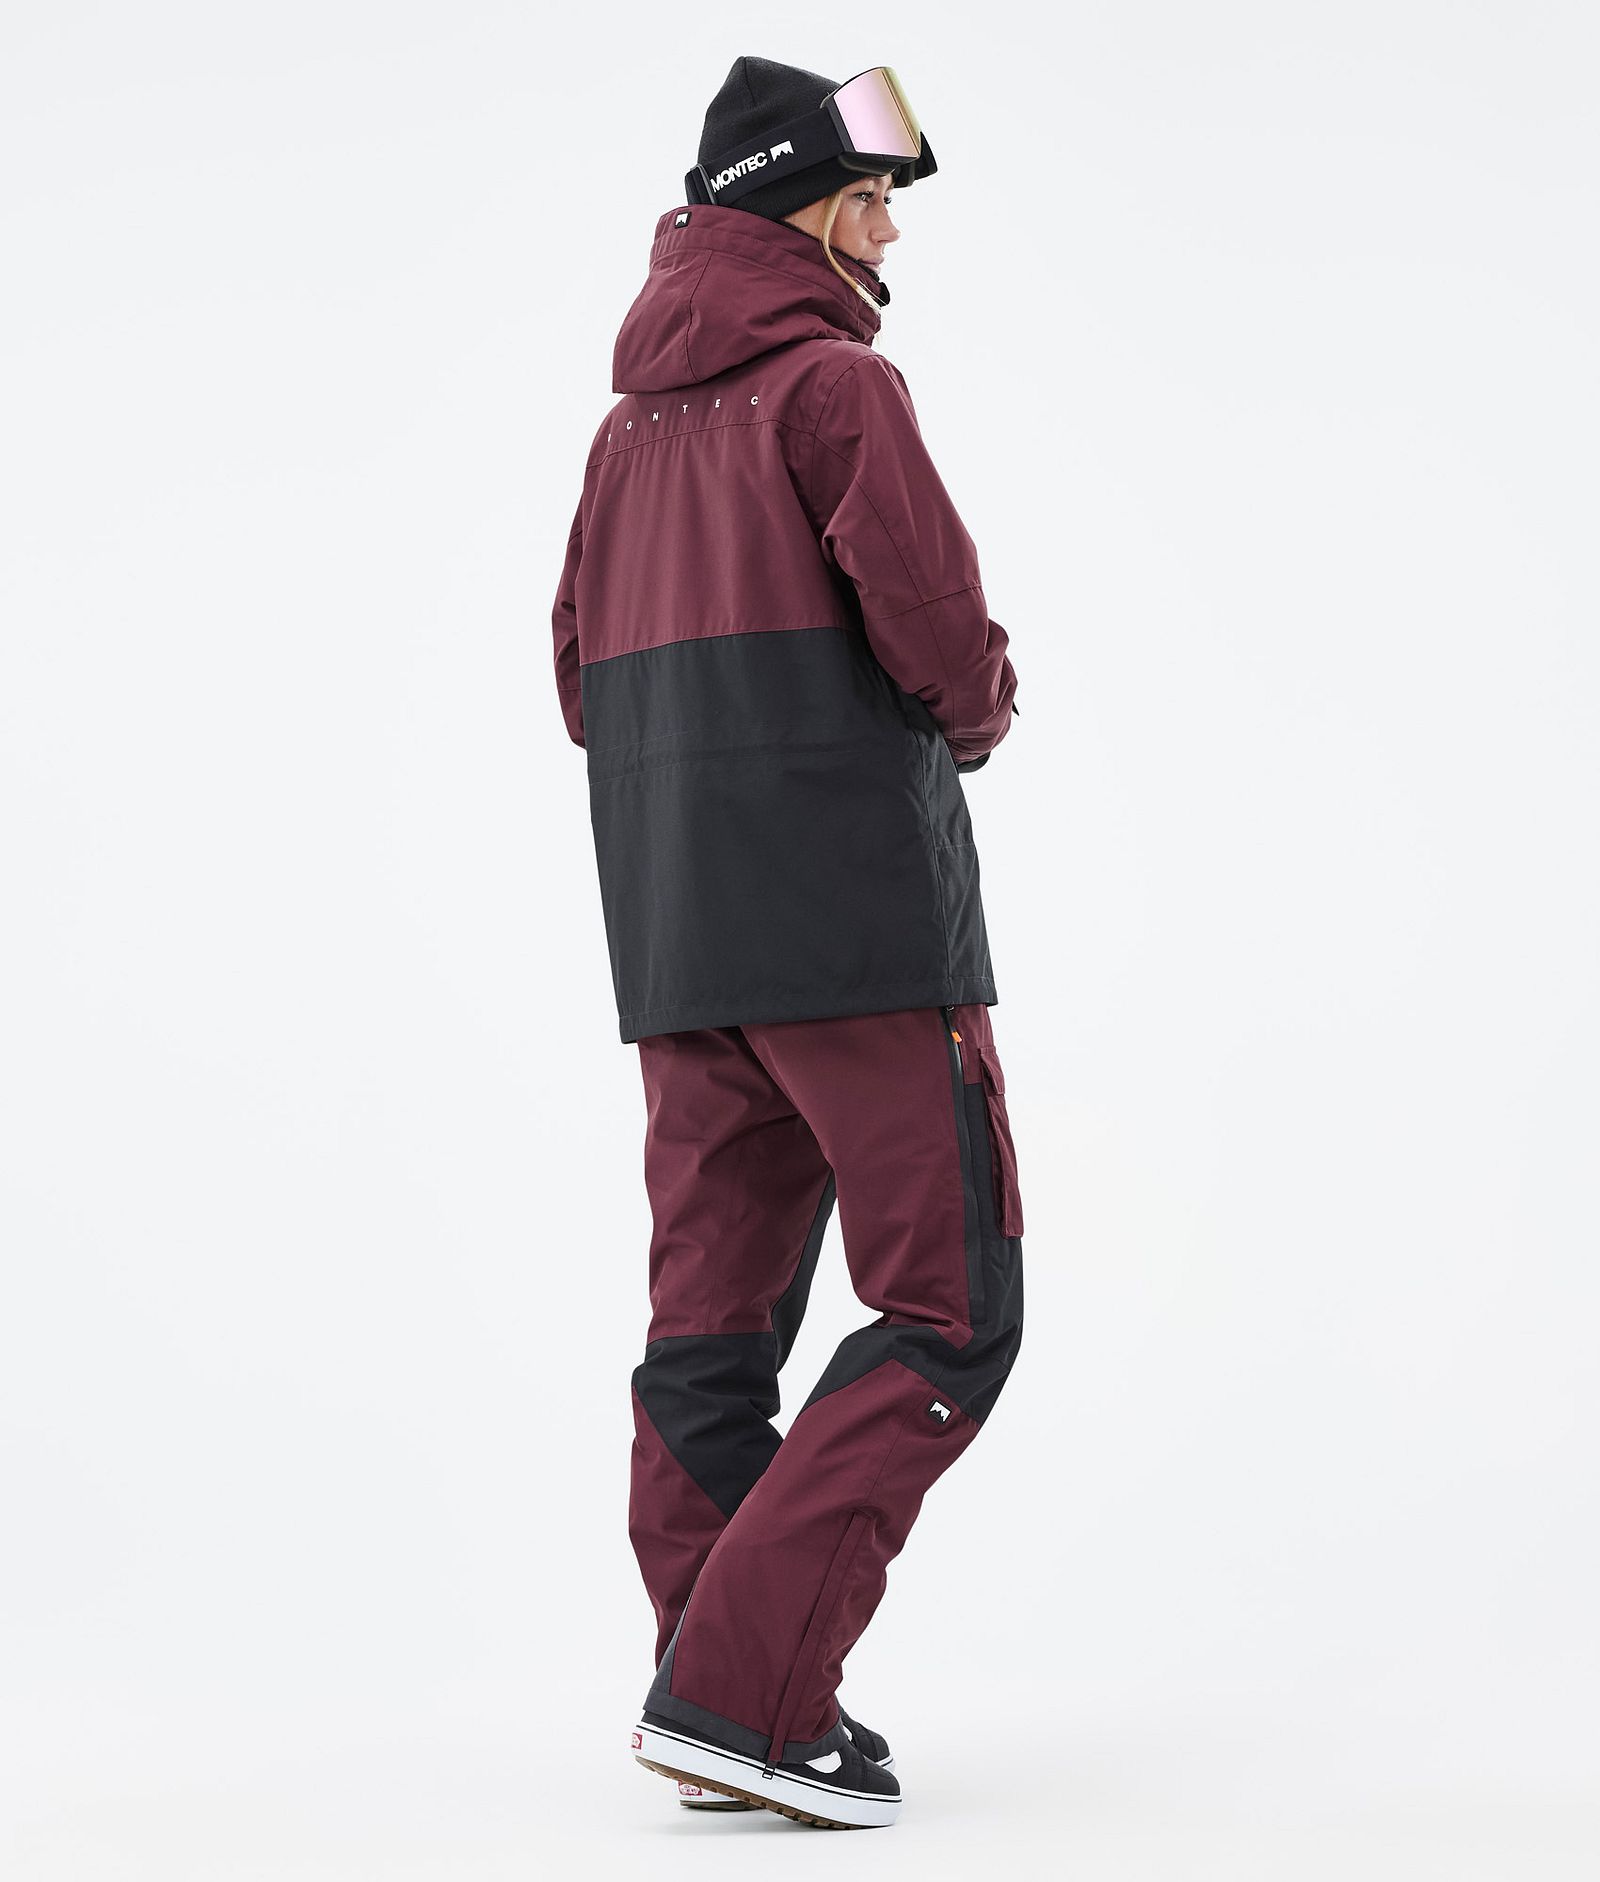 Montec Doom W Outfit de Snowboard Mujer Burgundy/Black